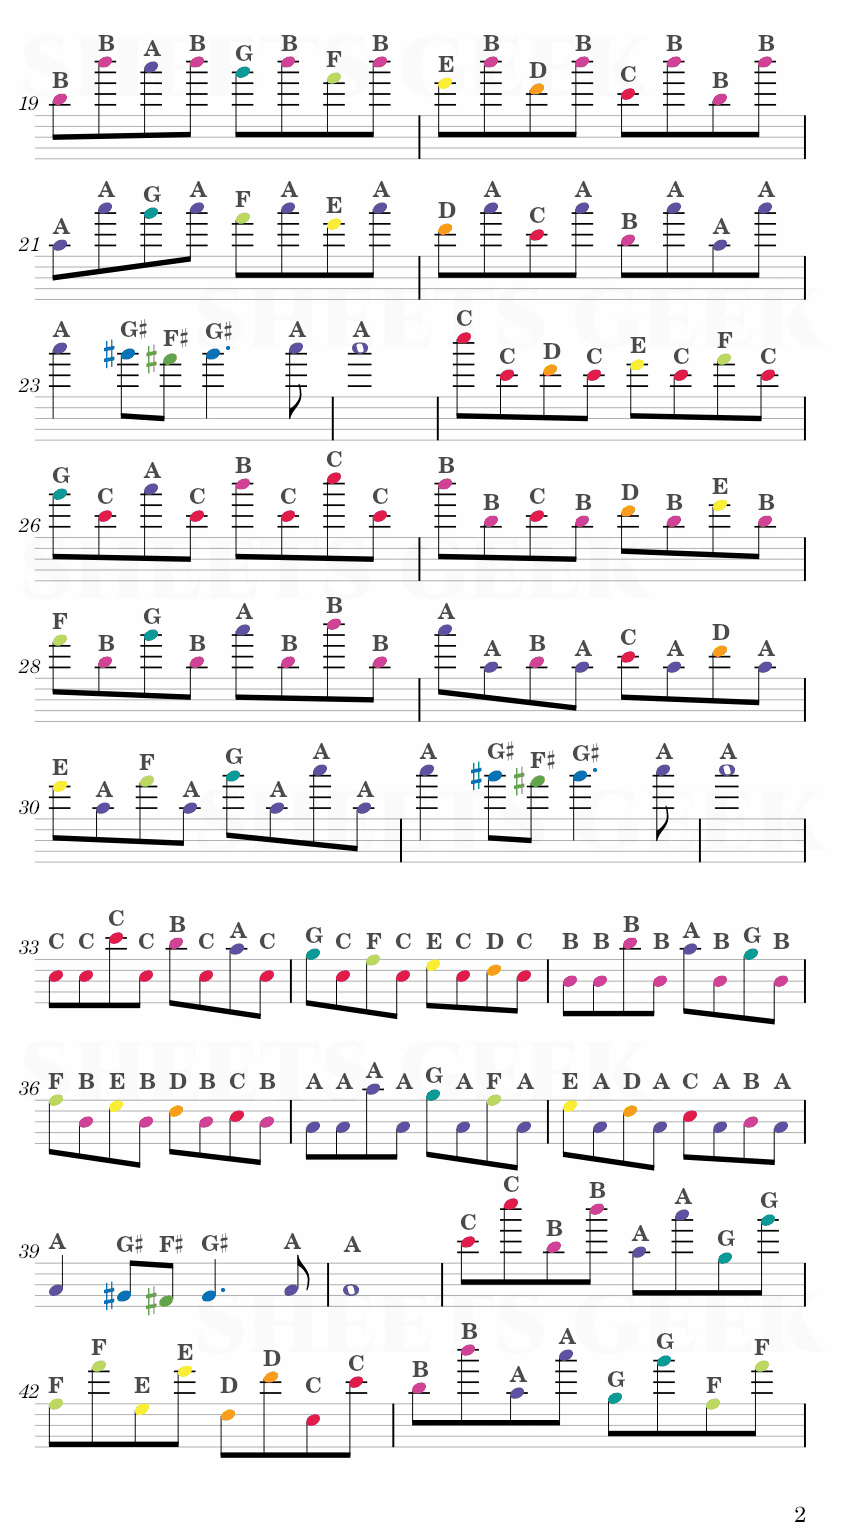 Passacaglia - Johan Halvorsen Easy Sheet Music Free for piano, keyboard, flute, violin, sax, cello page 2